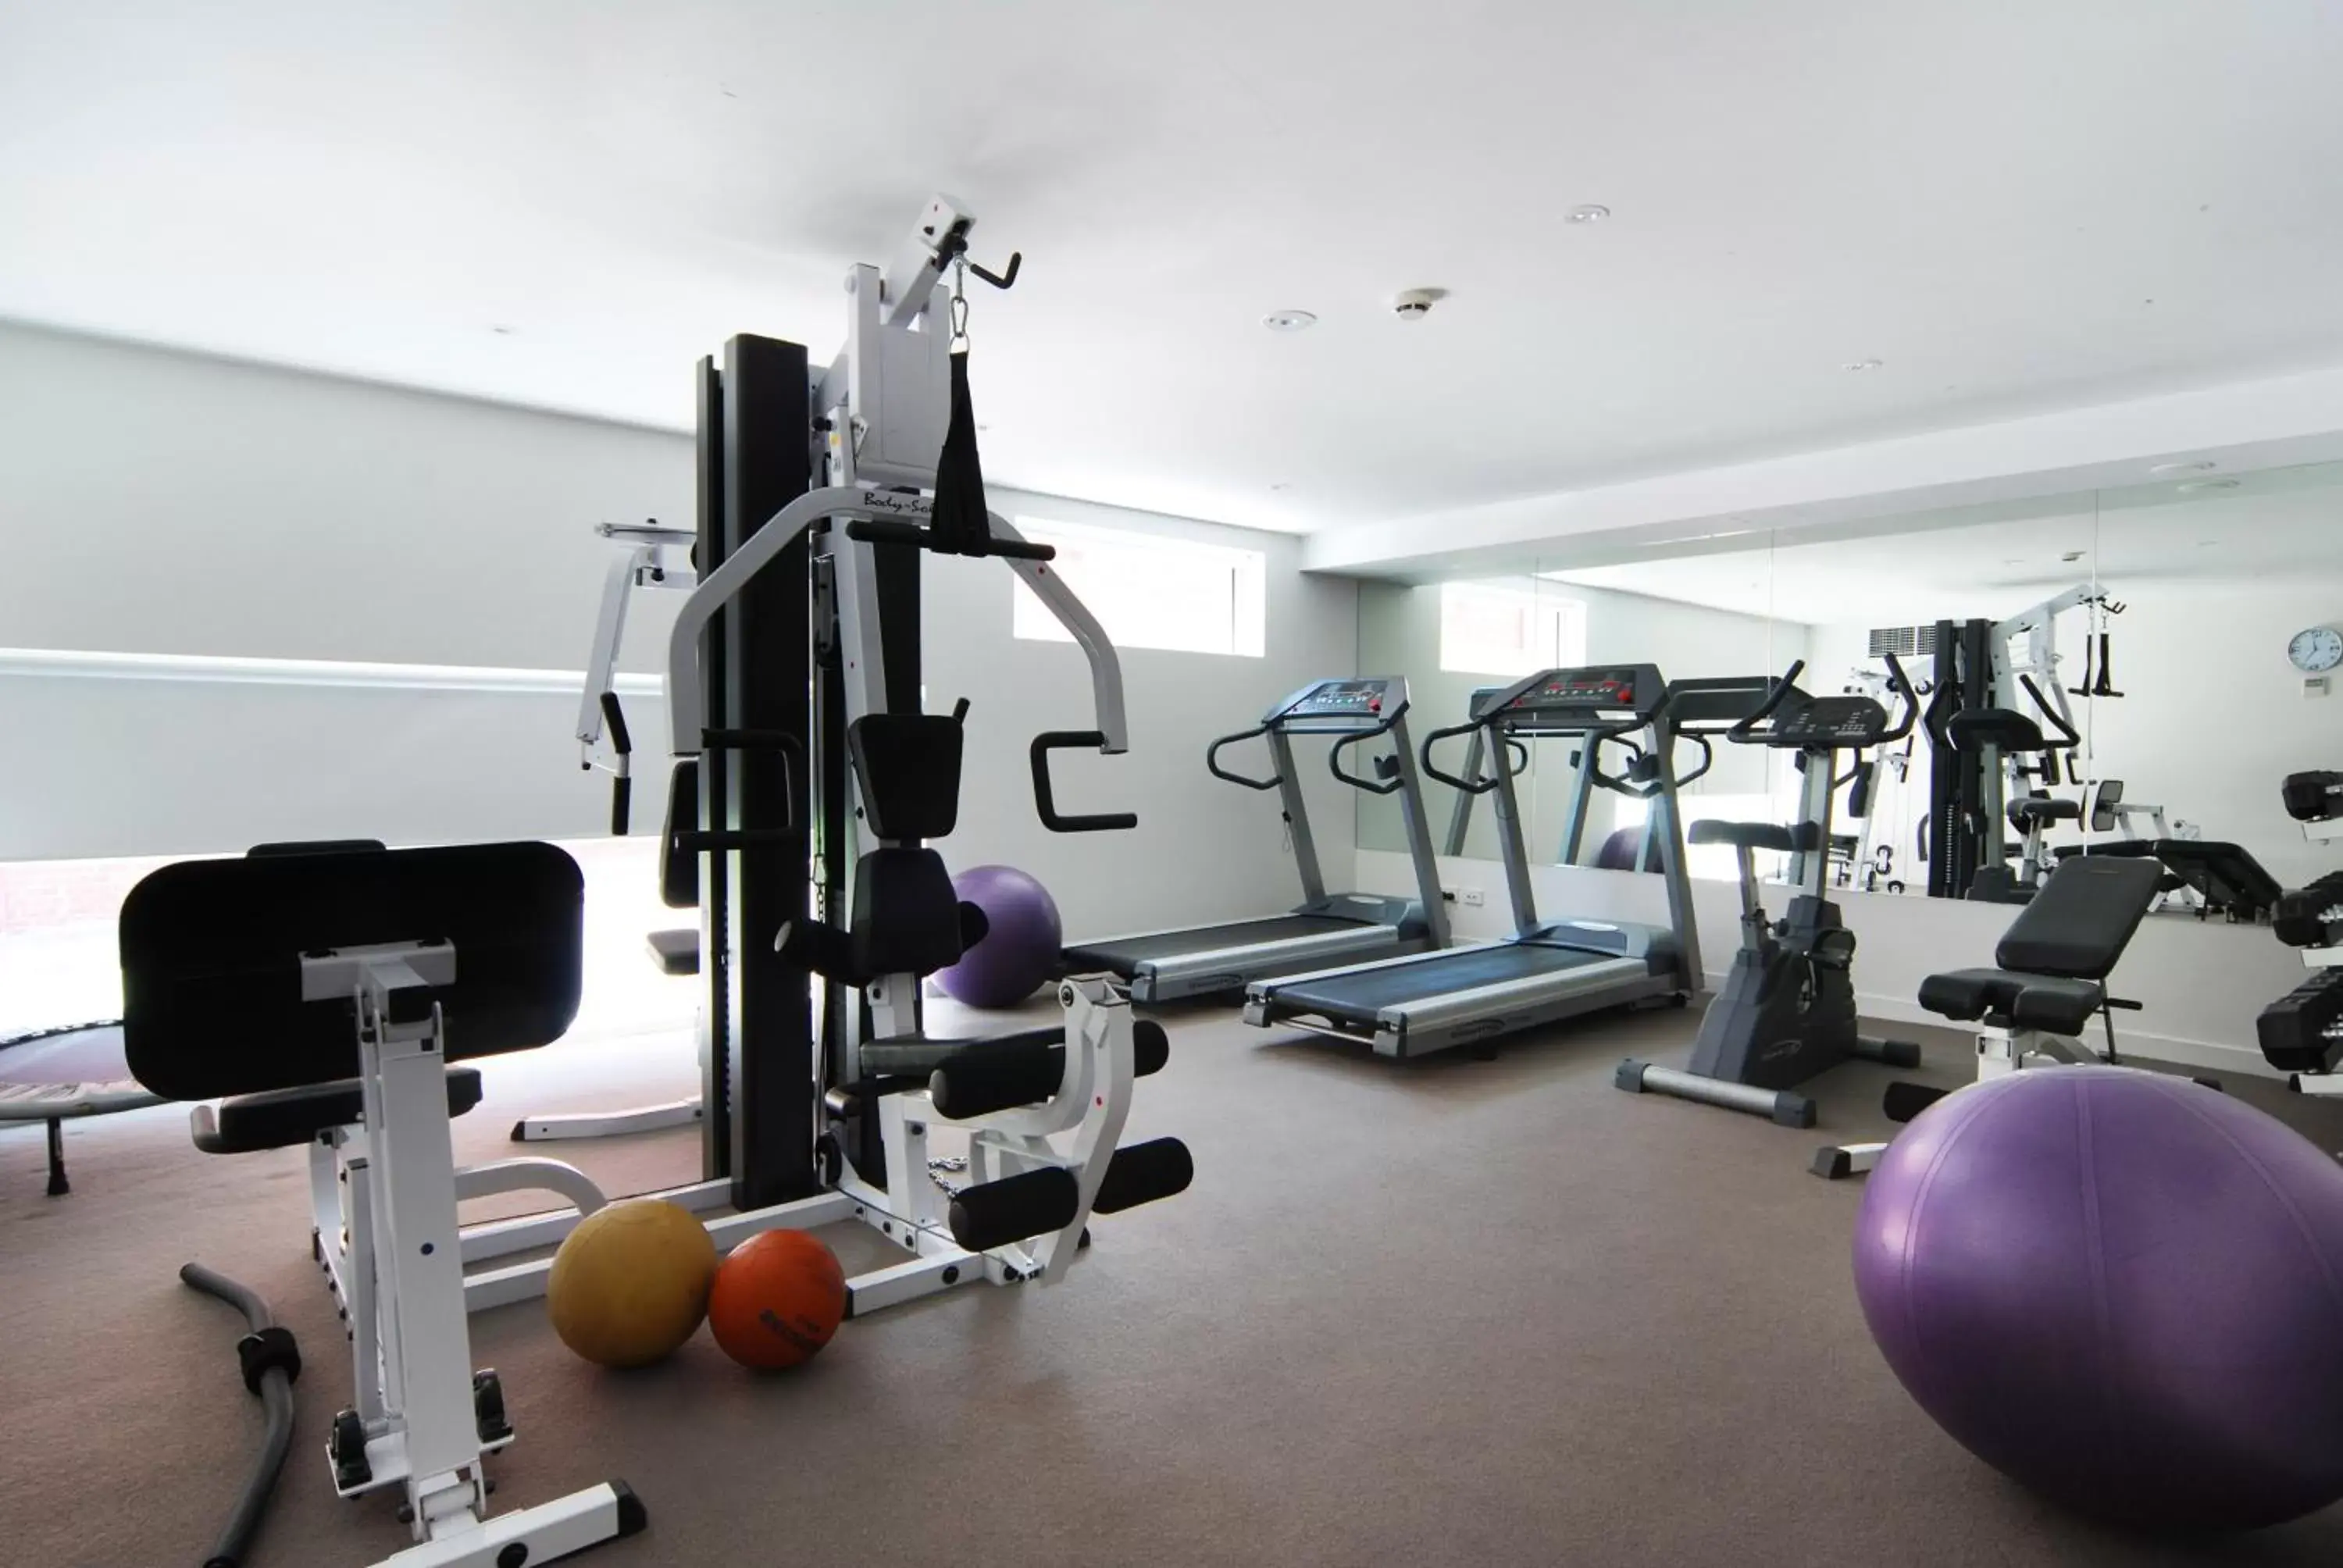 Fitness centre/facilities, Fitness Center/Facilities in Adara Richmond